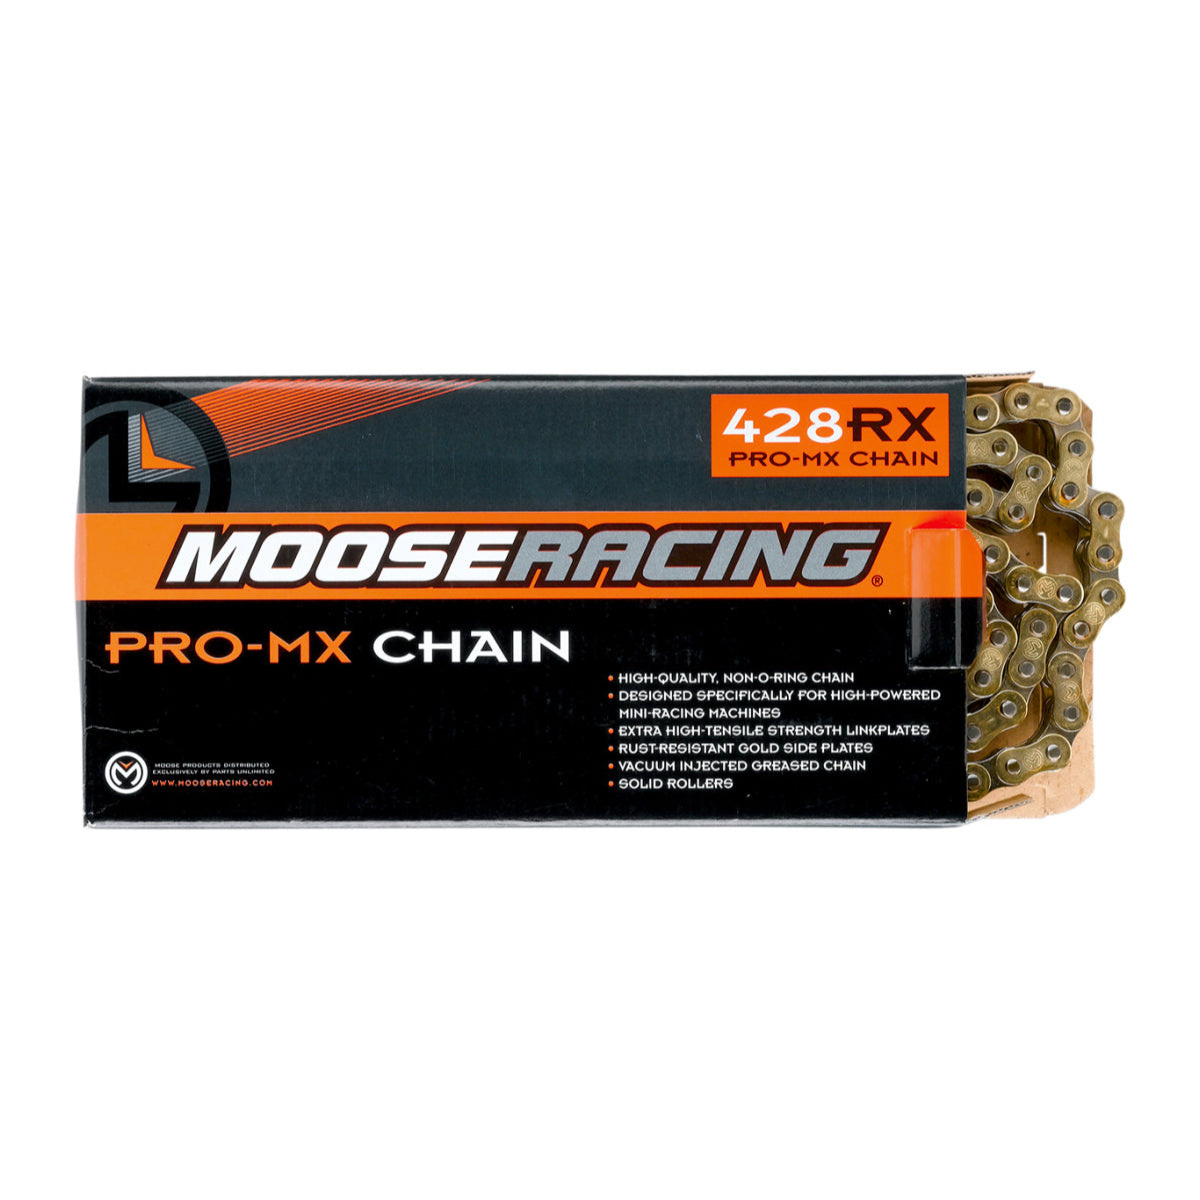 Moose 428 RXP Pro-MX Chain